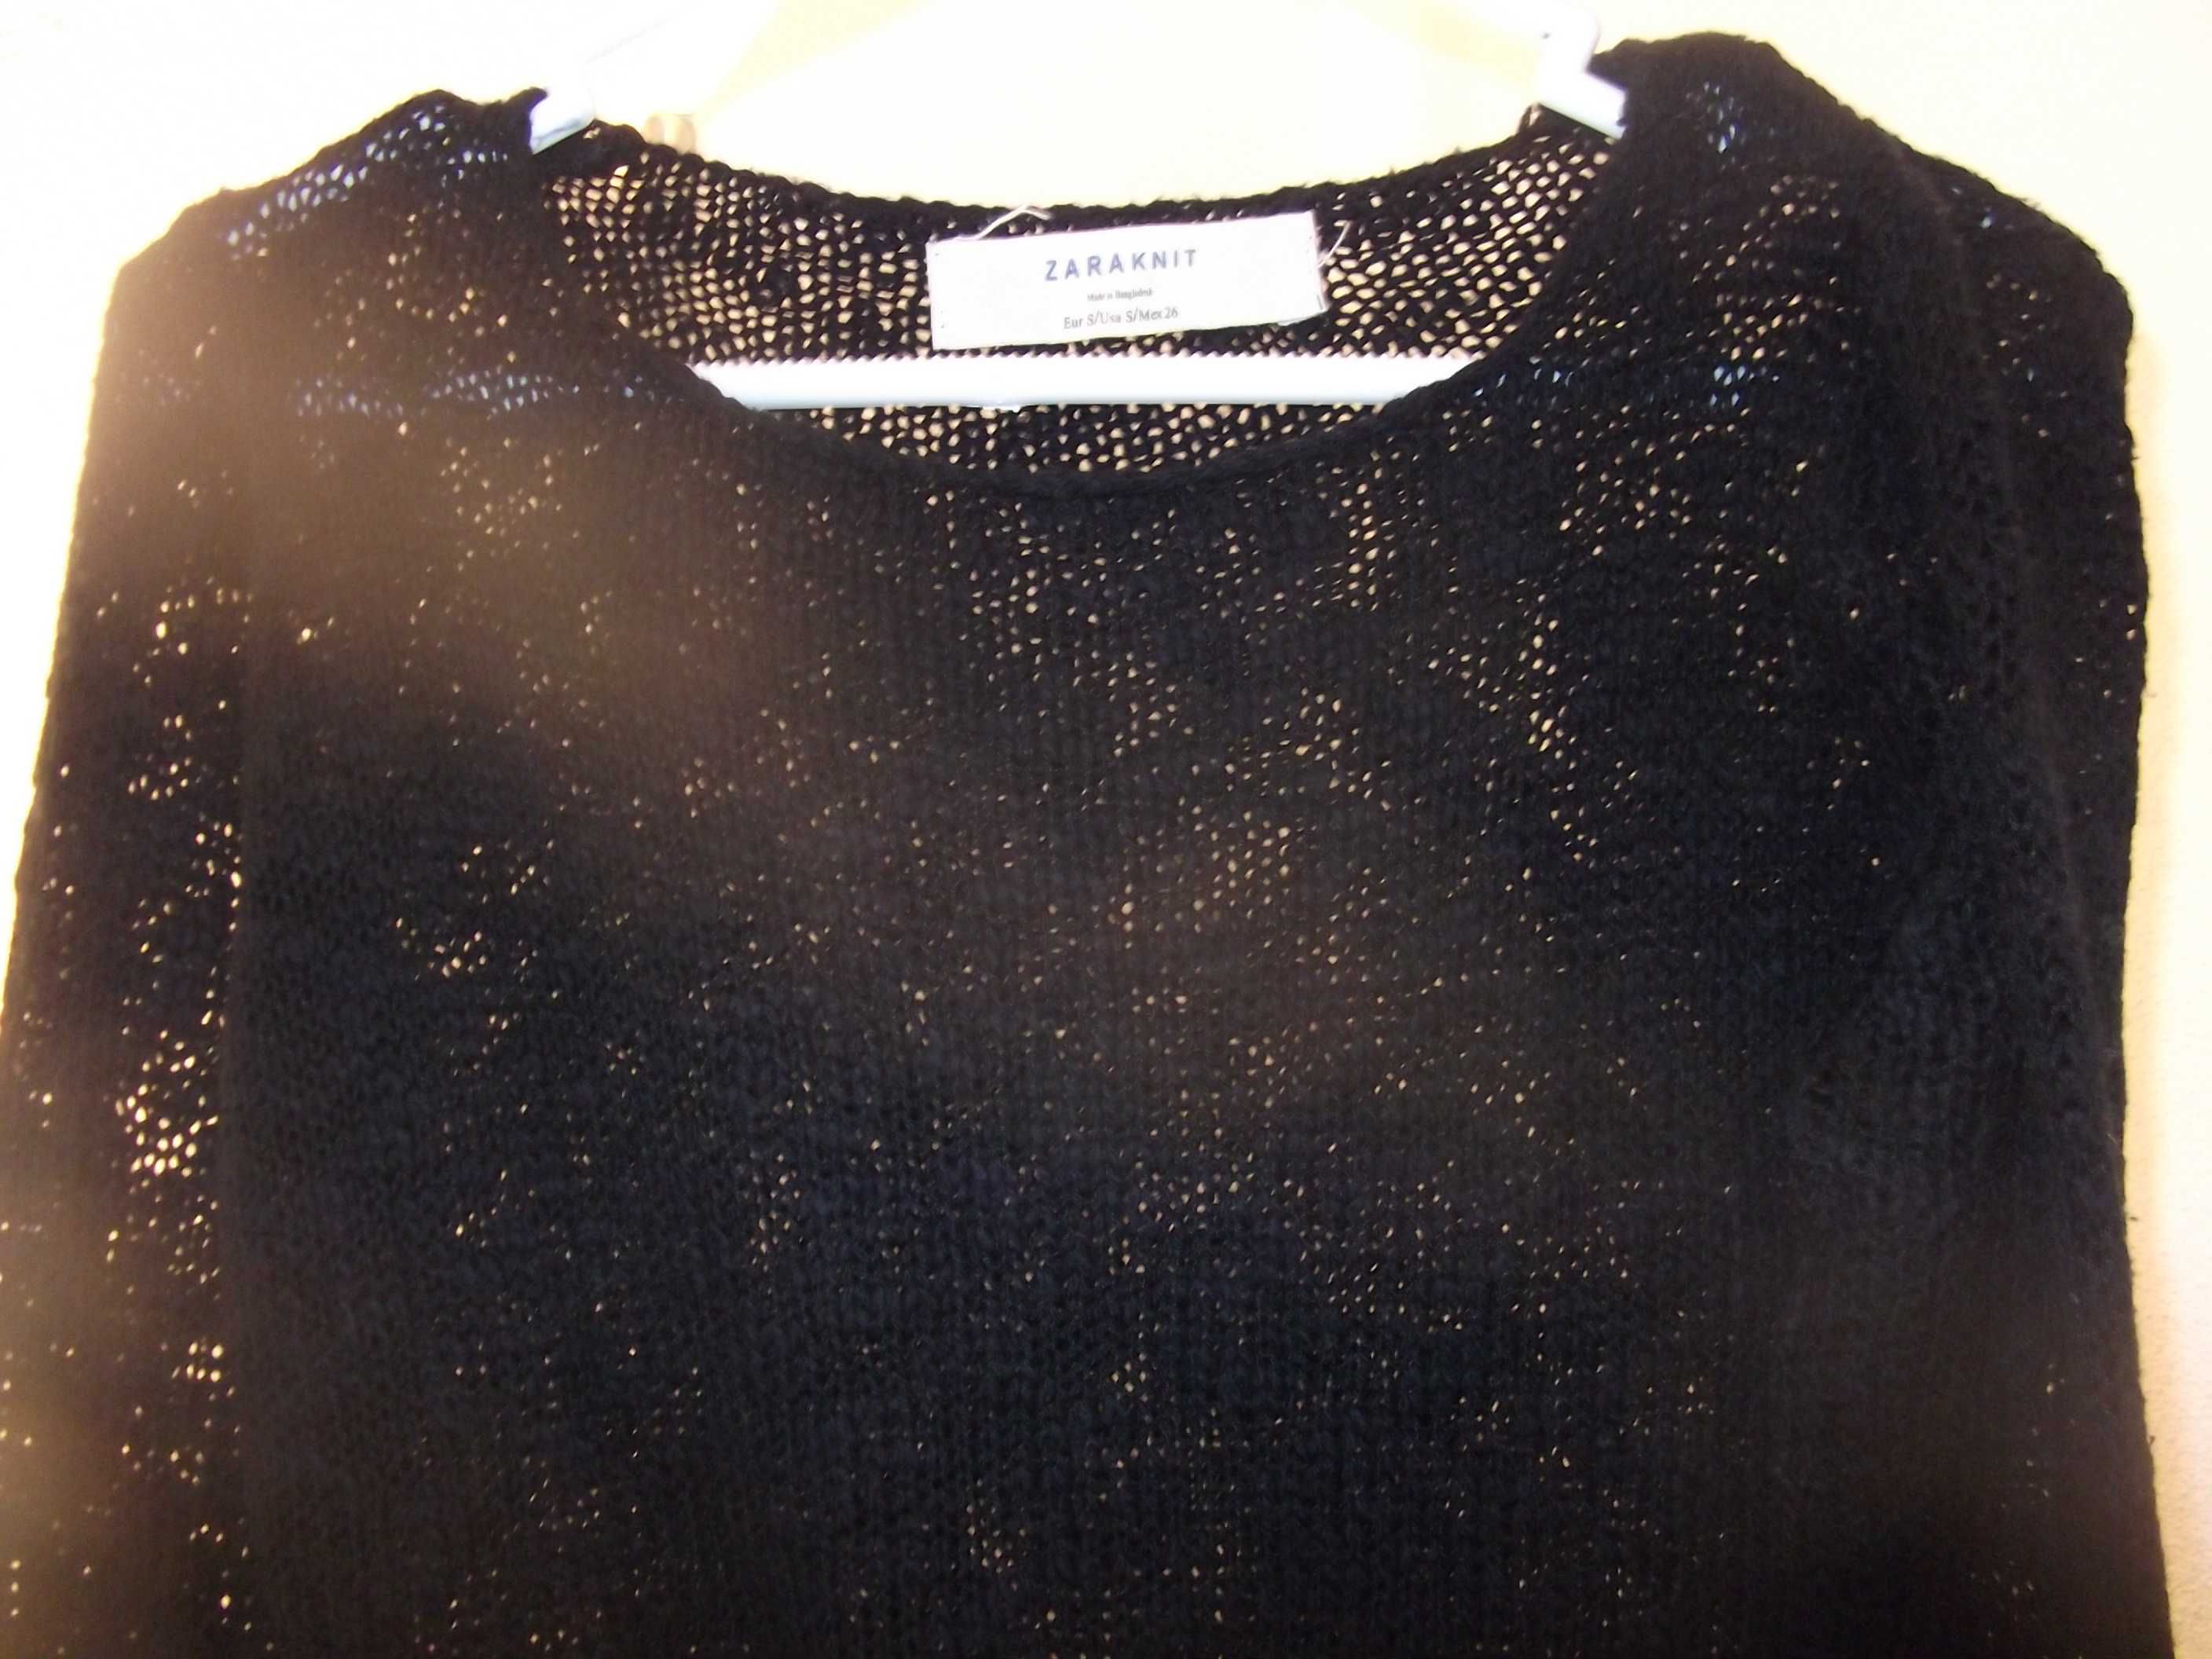 Camisola malha preta / Black knit sweater – ZARA KNIT (S)